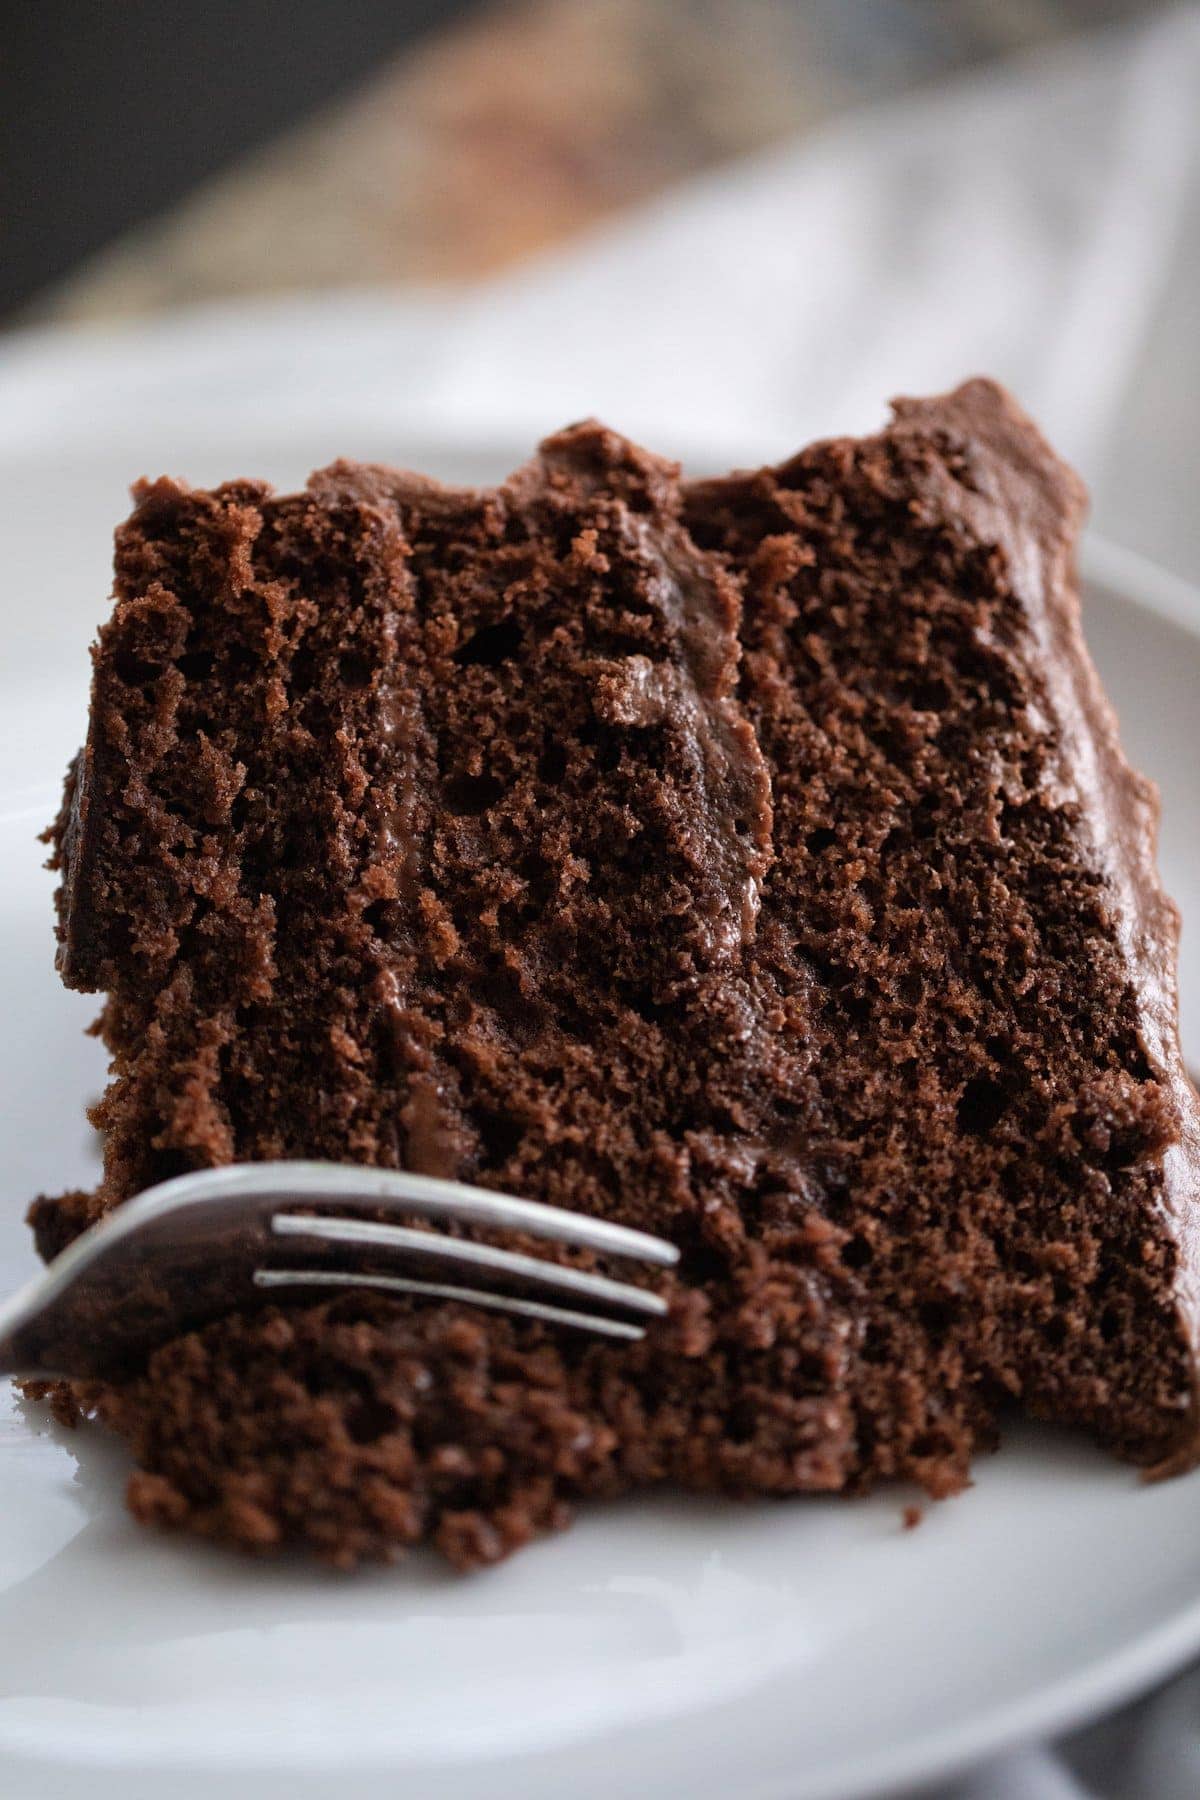 slice of chocolate cake on plate